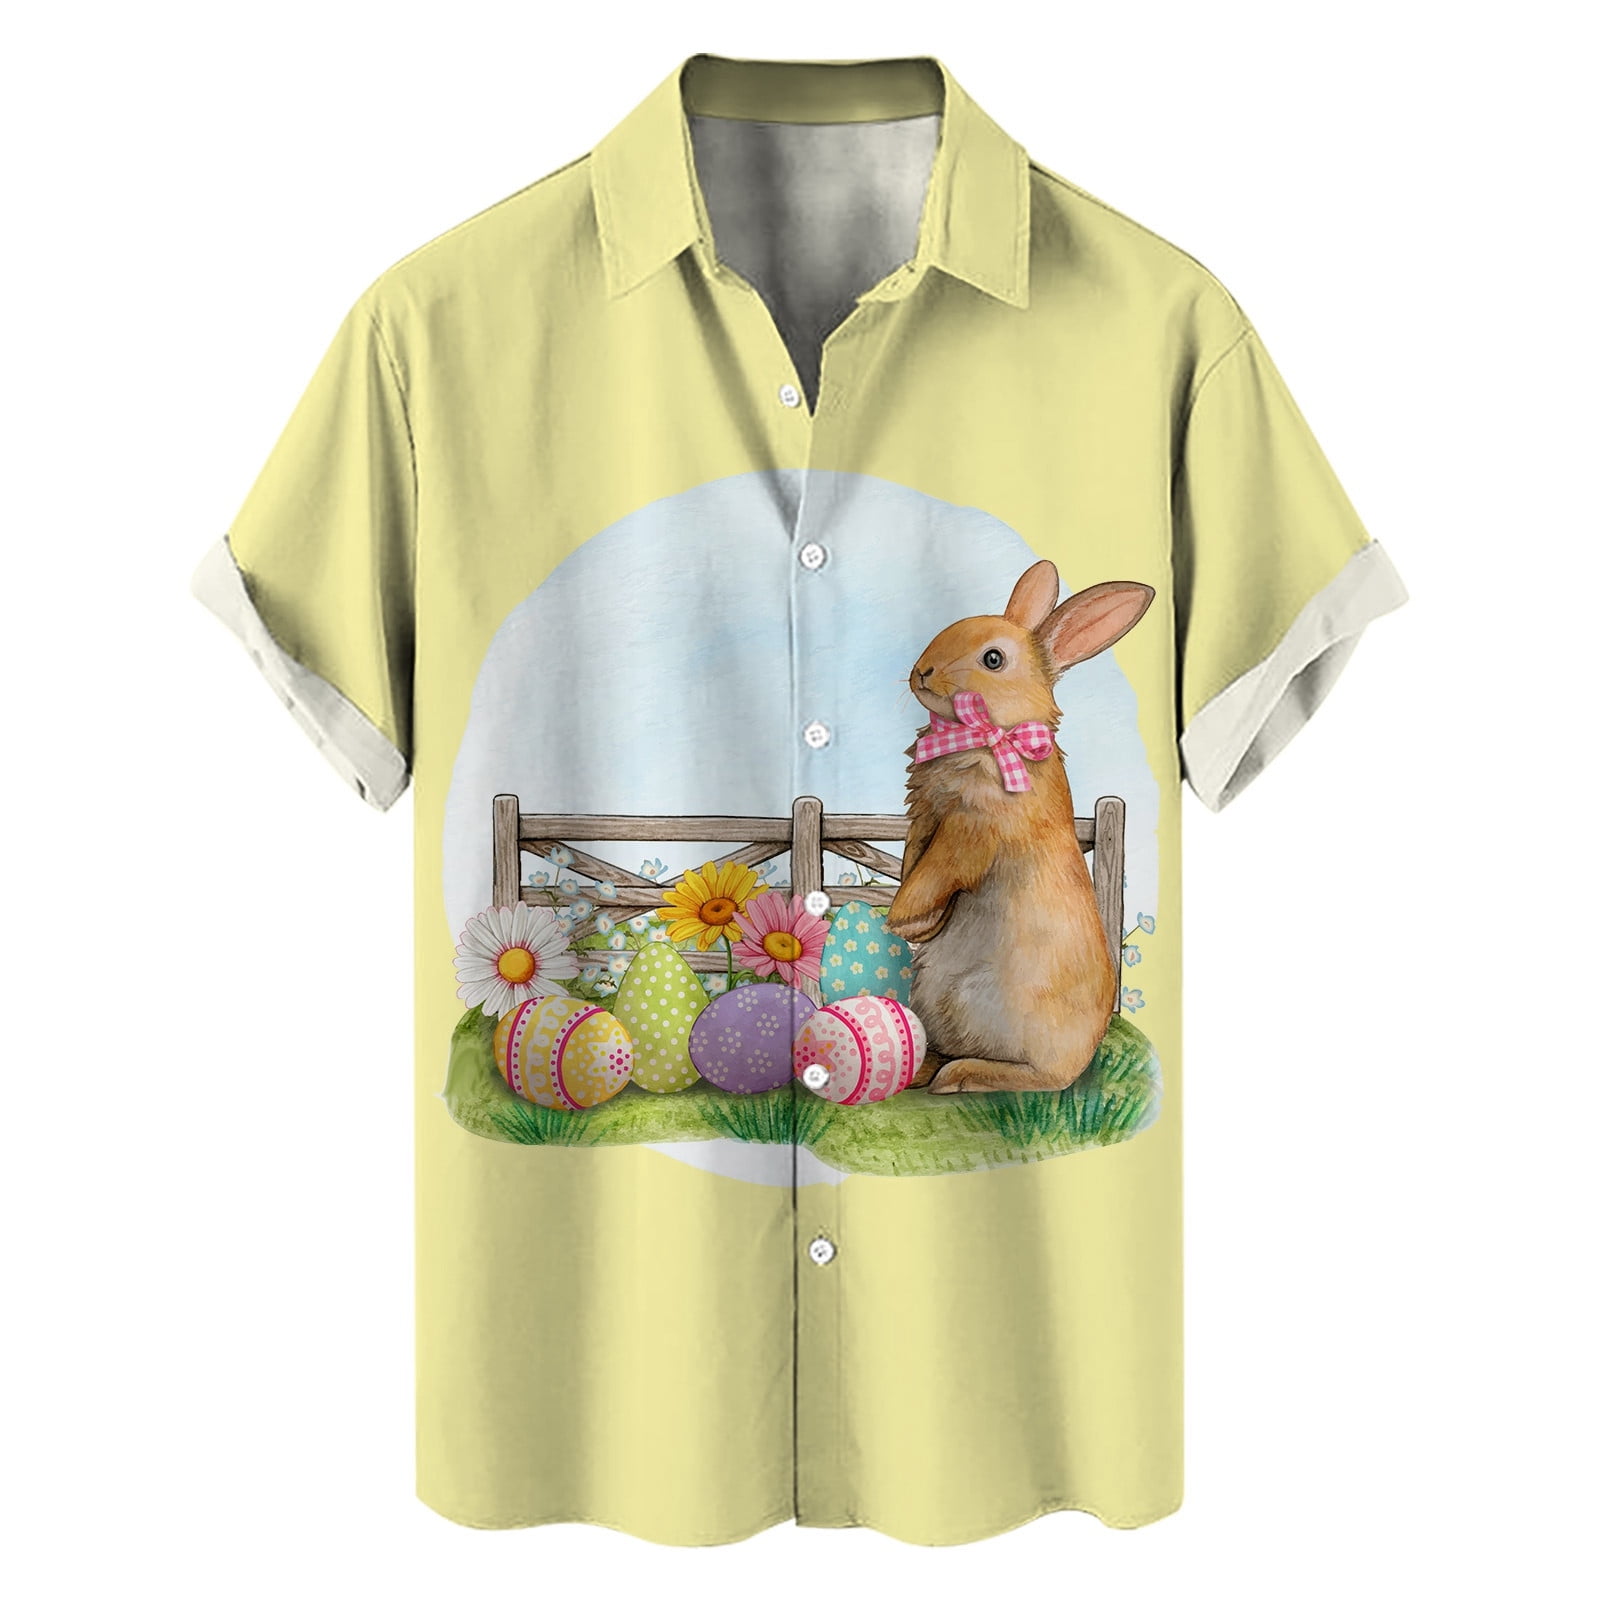 AdBFJAF Dress Shirts for Men Red and White Men's Easter Rabbit Print ...